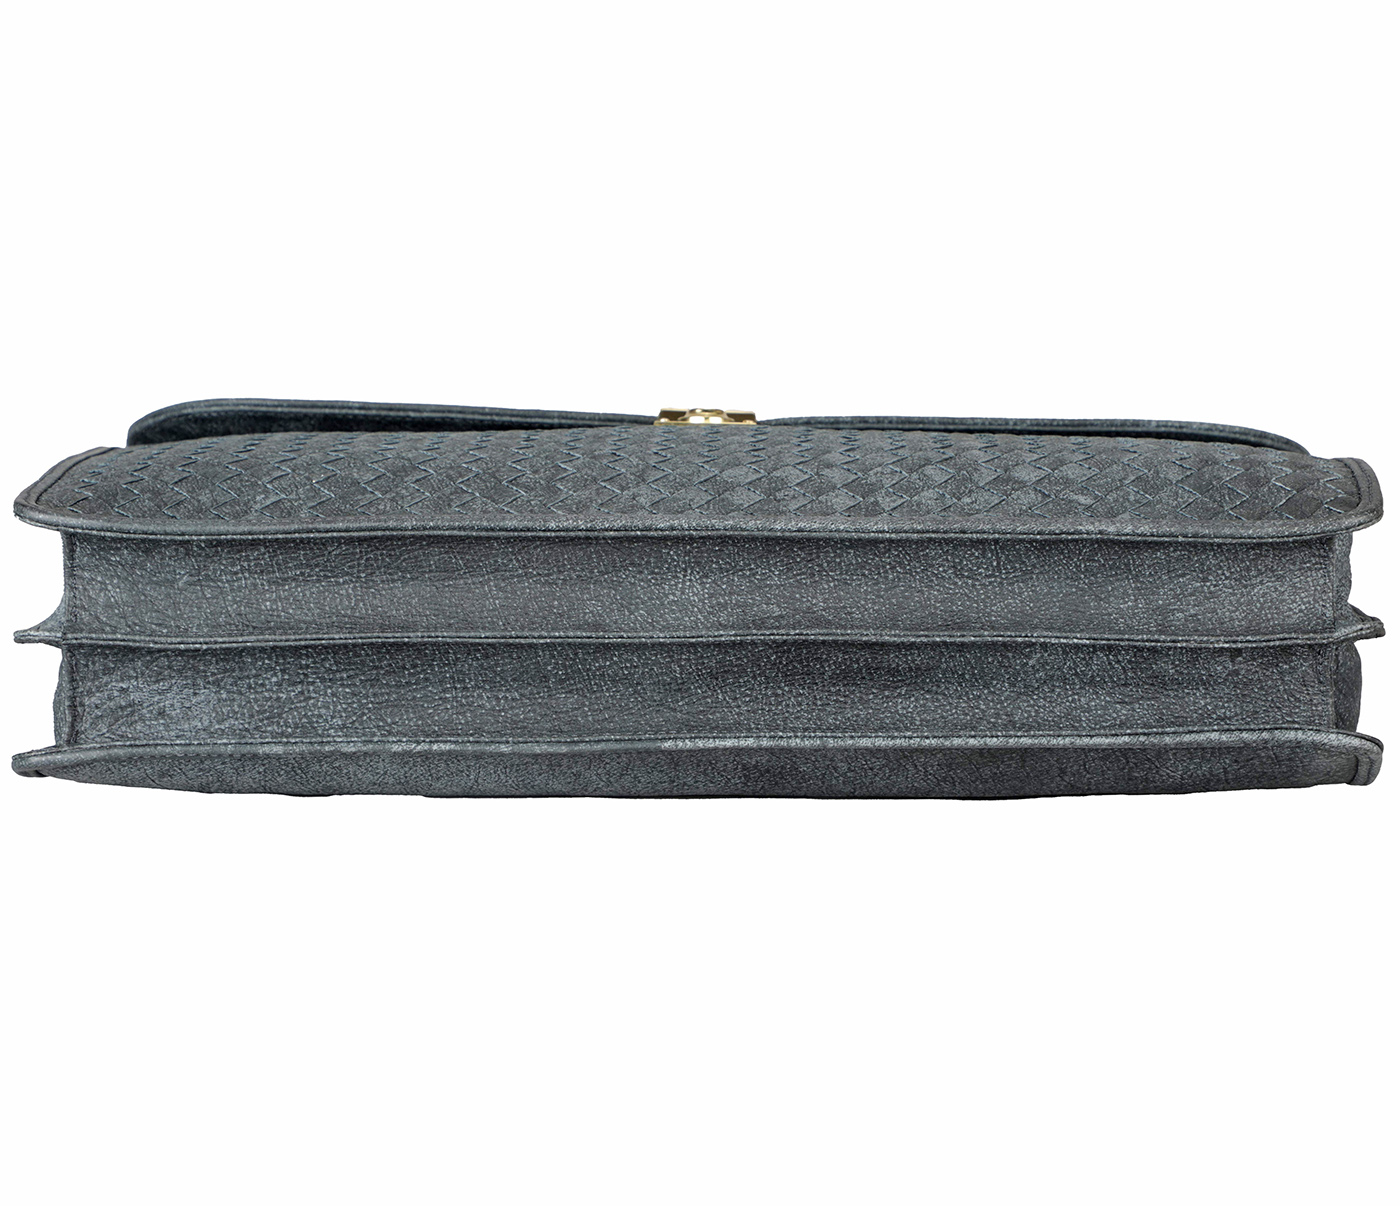 F80-Lorenzo Laptop, Portfolio Office Executive Bag in Genuine Leather- - blk